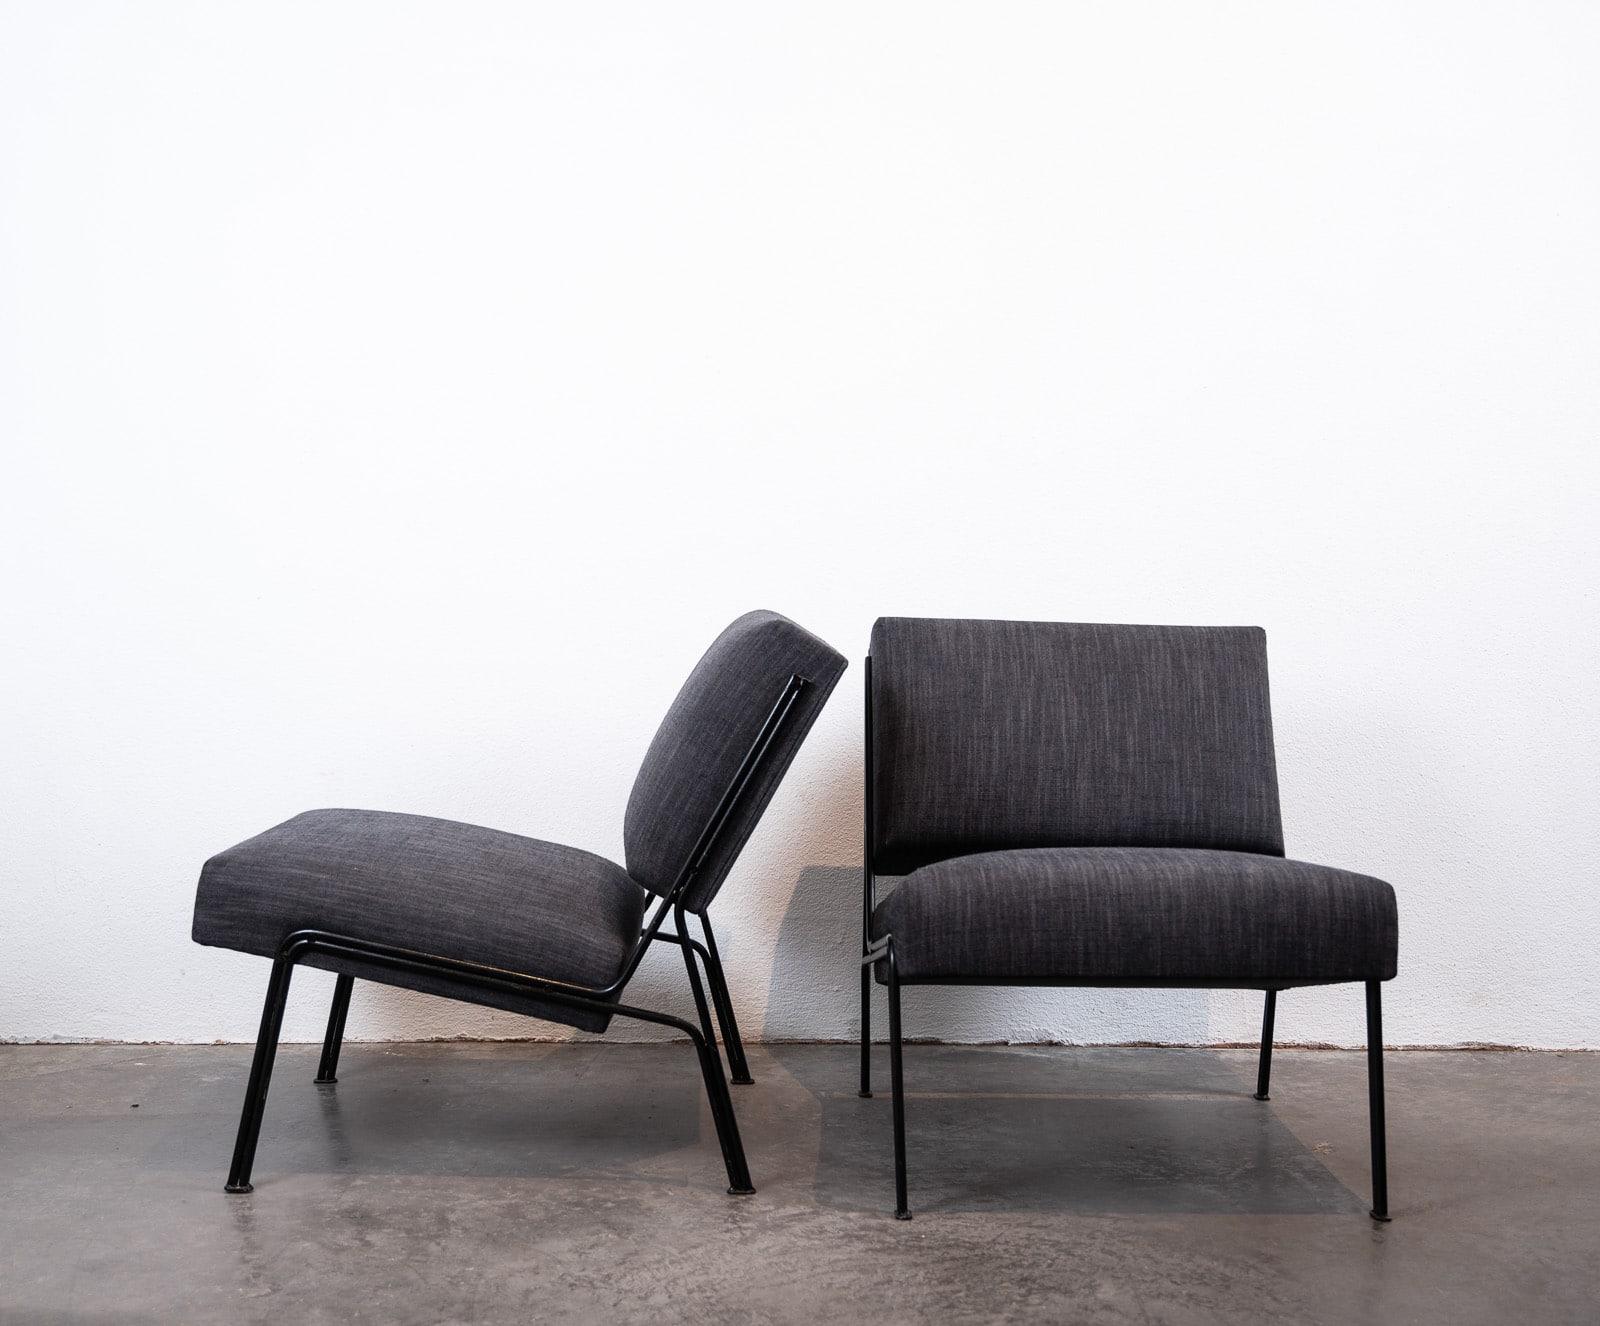 Pair of G2 chairs designed by Pierre Guariche, Joseph-André Motte and Michel Mortier for ARP (Atelier de Recherches Plastiques) Airborne edition – 1953

priced for the pair.